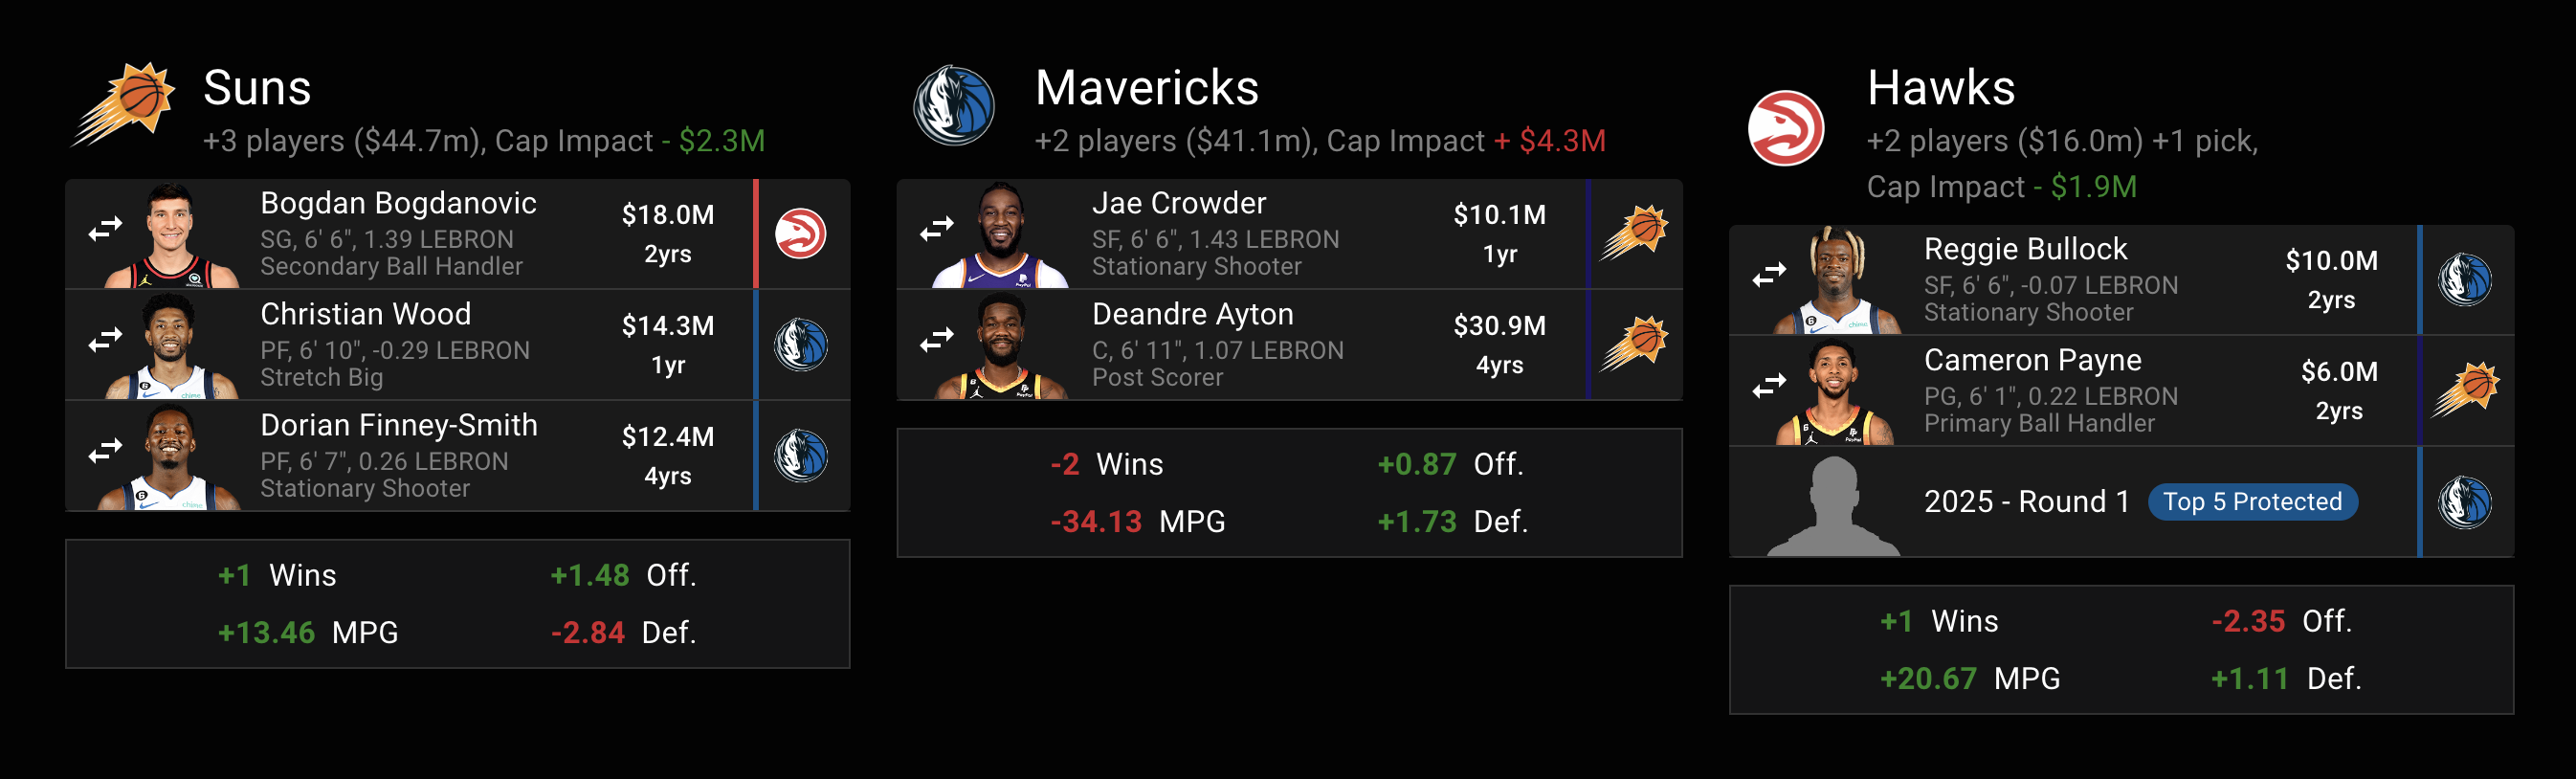 Phoenix Suns make a 3-team trade with Mavericks and Hawks